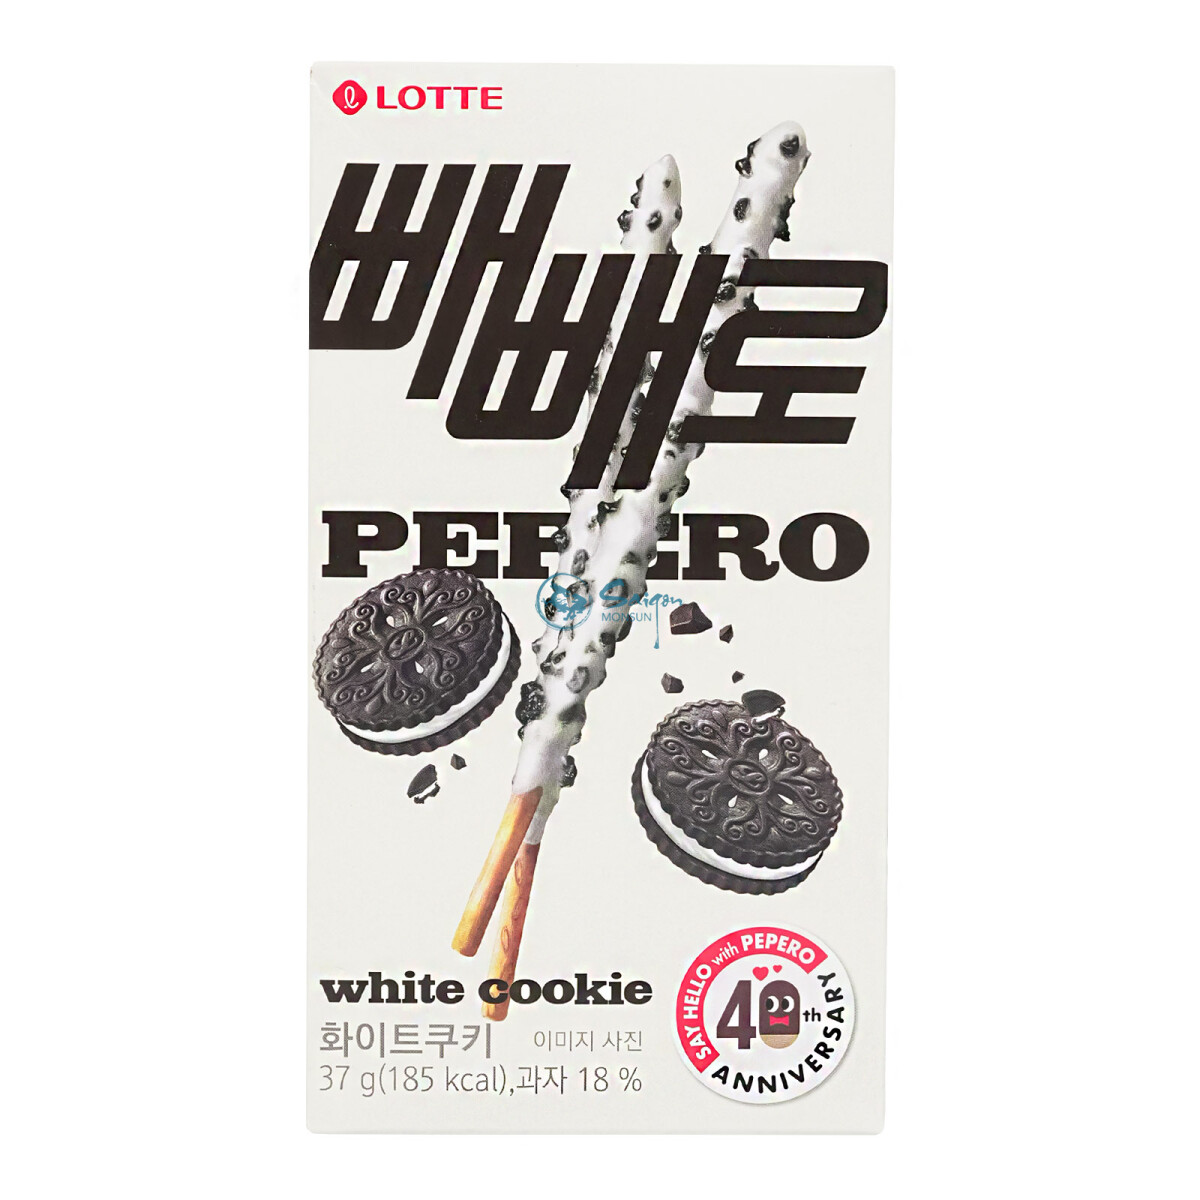 !! Lotte Pepero White Cookie Sticks 37g